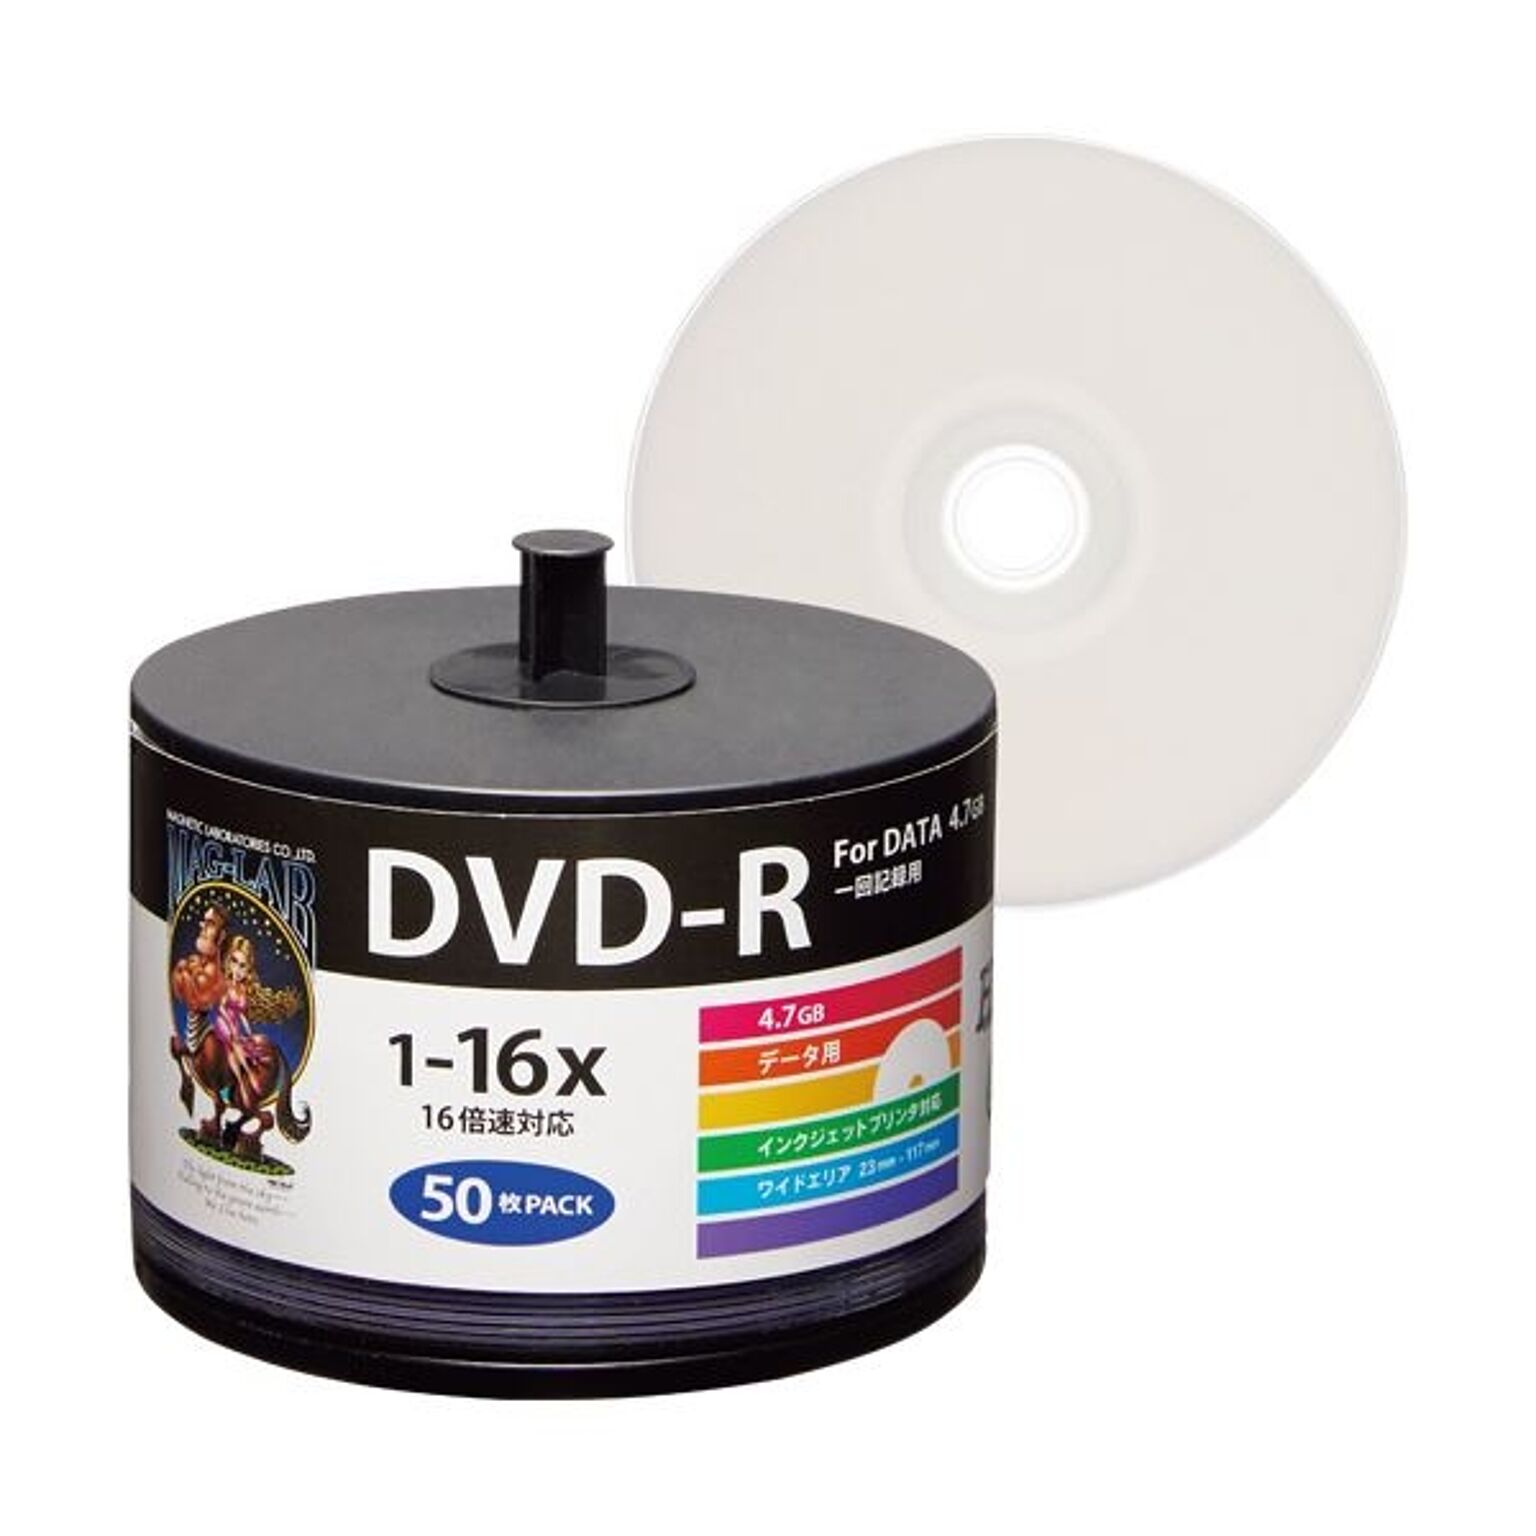 MAG-LAB HI-DISC データ用 16倍速対応DVD-R 50枚 VVDDR47JP50